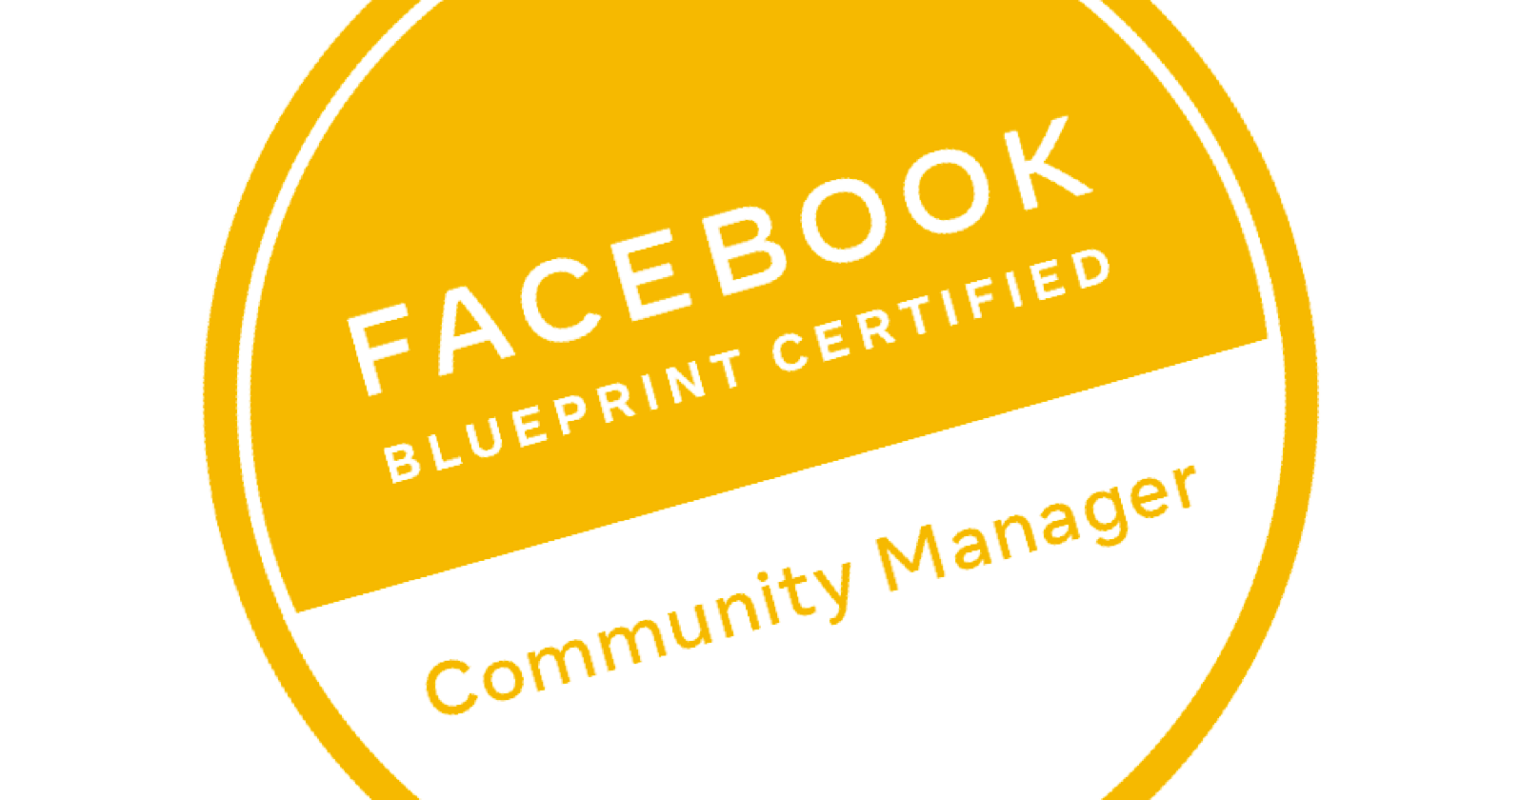 Facebook community manager certification badge